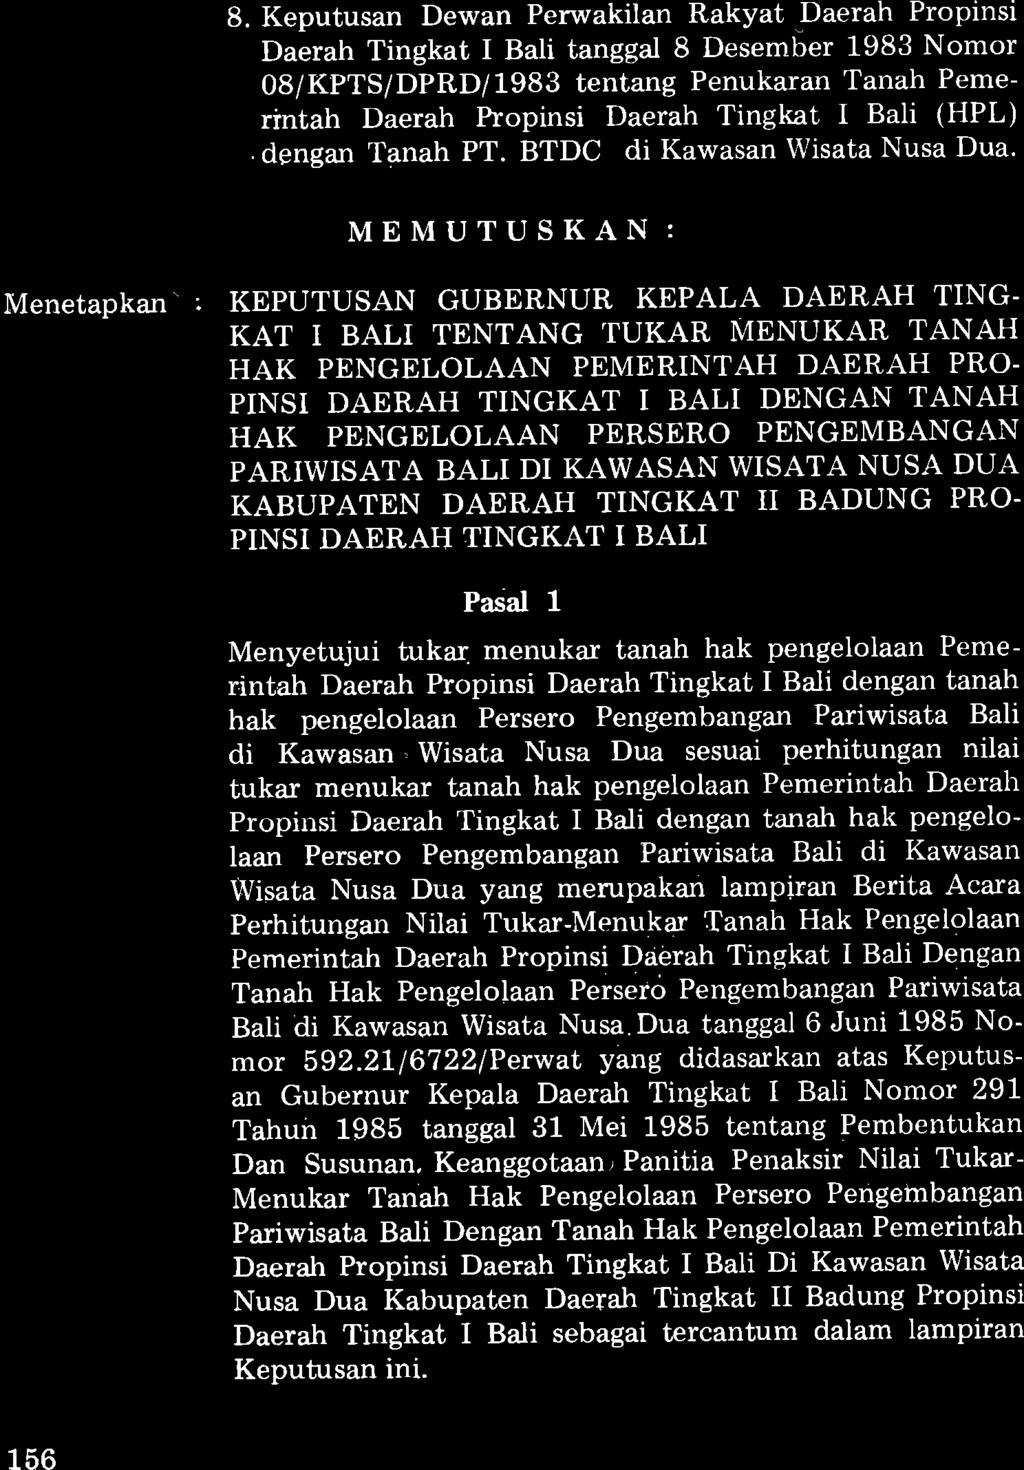 8. Keputusan Dewan Perwakilan Rakyat Daerah Propinsi Daerah Tingkat I Bali tanggal 8 Desember 1983 Nomor 08/KPTS/DPRD/1983 tentang Penukaran Tanah Pemerintah Daerah Propinsi Daerah Tingkat I Bali